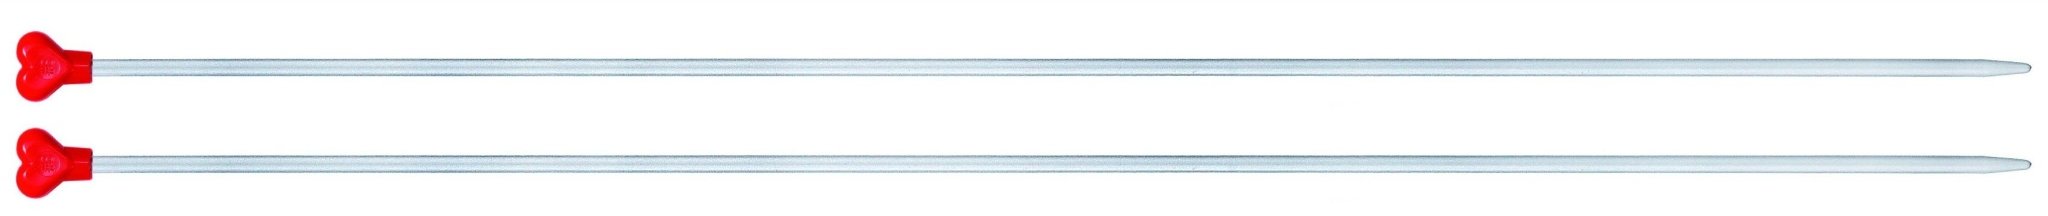 Addi Metal Single Point Needles 20cm - 3.75mm (US 5)